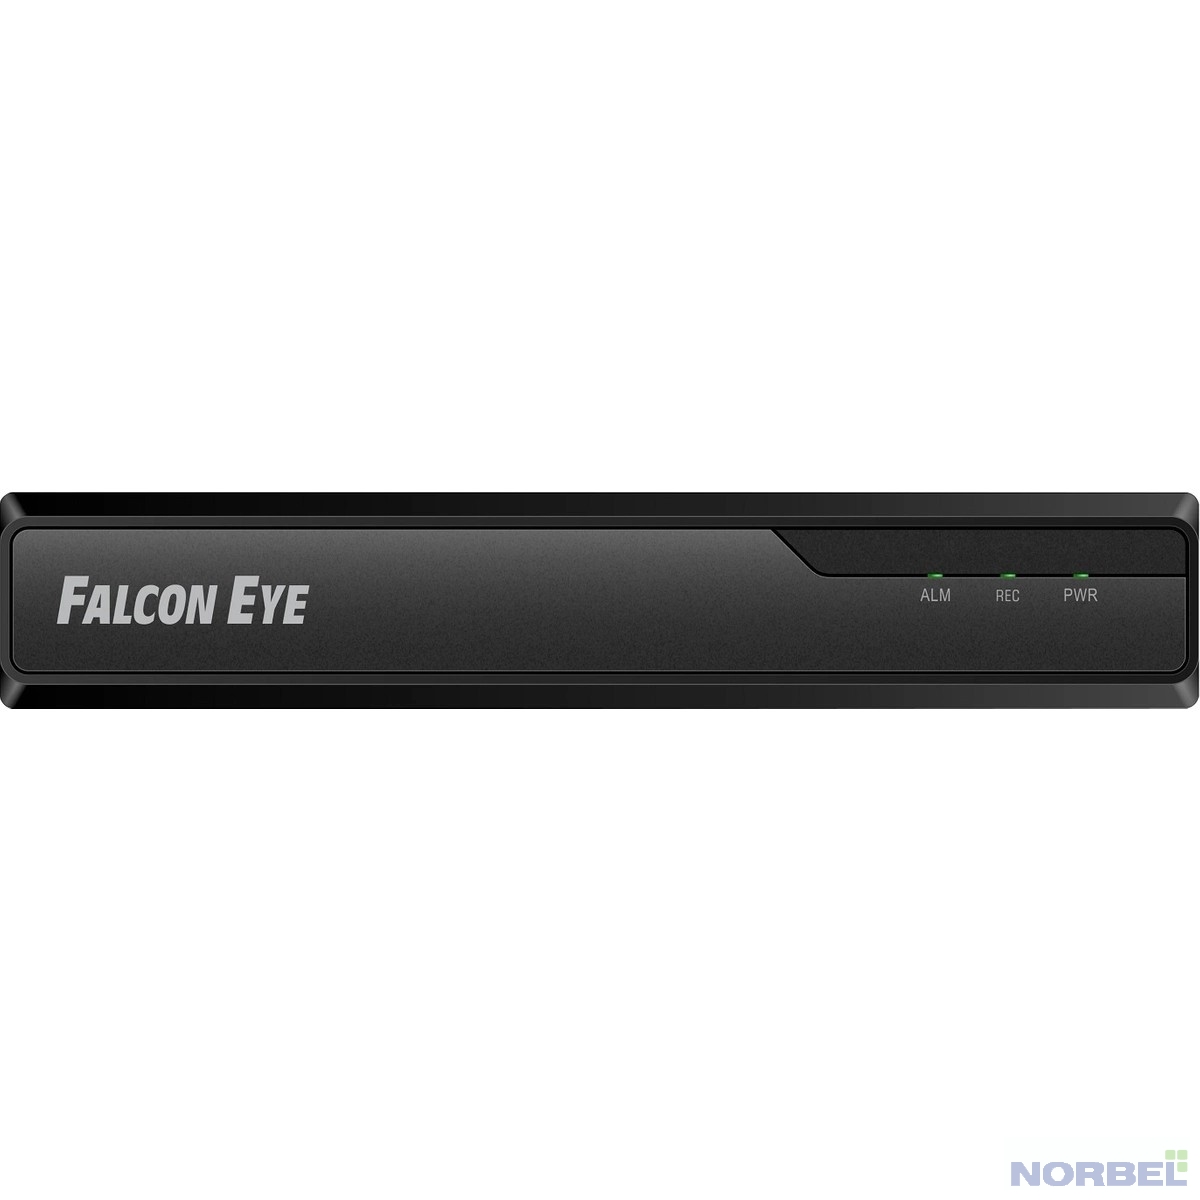 Falcon Eye FE-MHD1104 4 канальный 5 в 1 регистратор: запись 4кан 1080N 25k с; Н.264 H264+; HDMI, VGA, SATA 1 до 6 Tb HDD , 2 USB; Аудио 1 1; Протокол ONVIF, RTSP, P2P; Мобильные платформы Android IOS